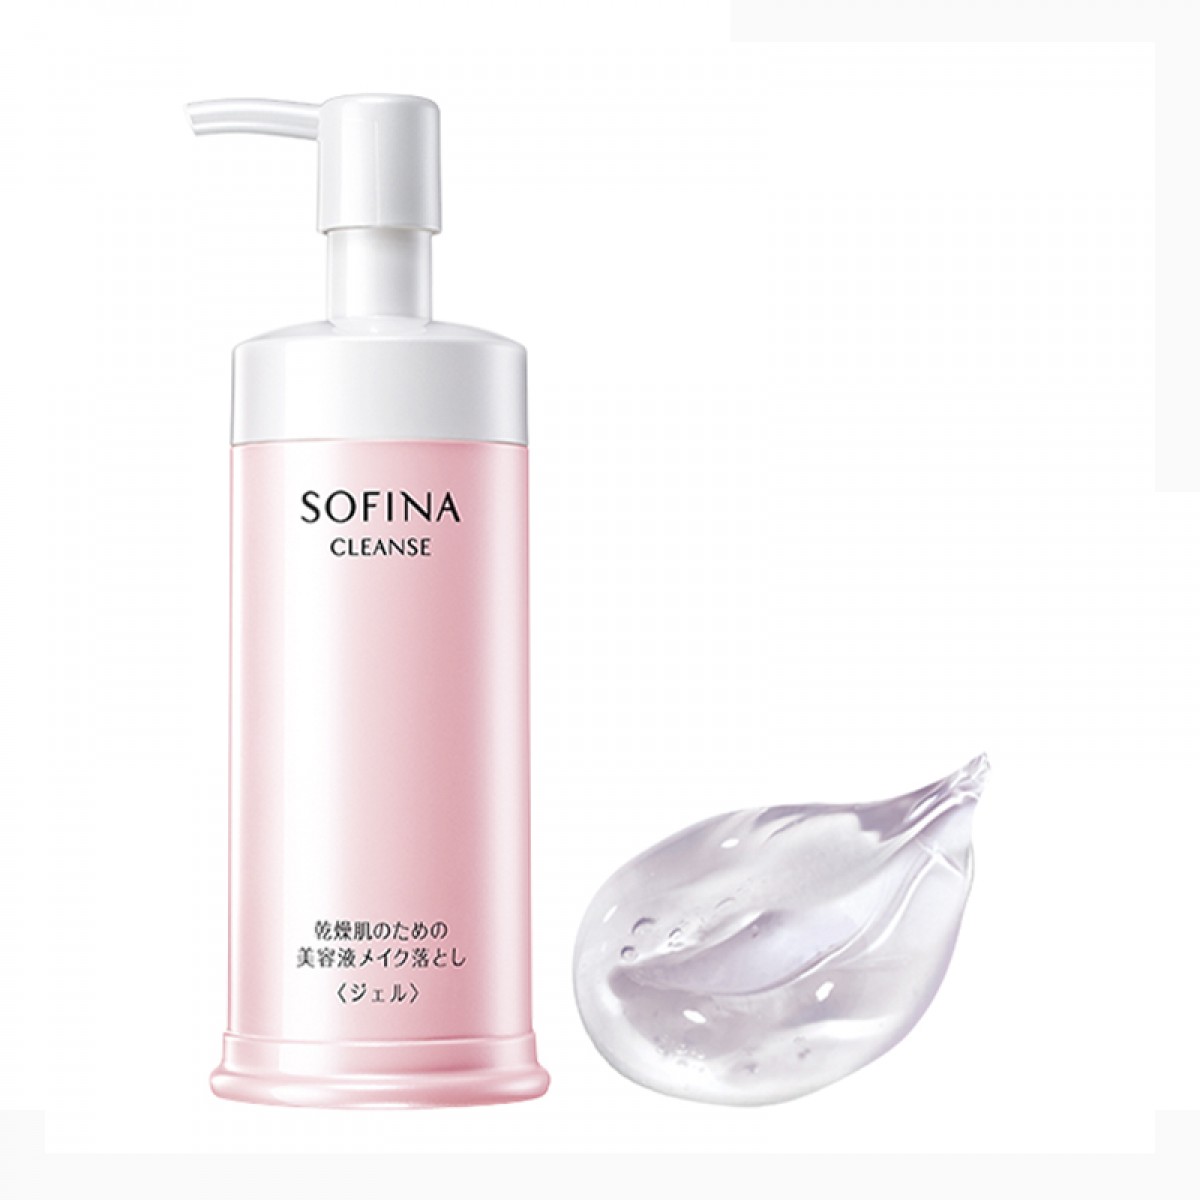 Sofia 索菲亚化妆品品牌-古田路9号-品牌创意/版权保护平台